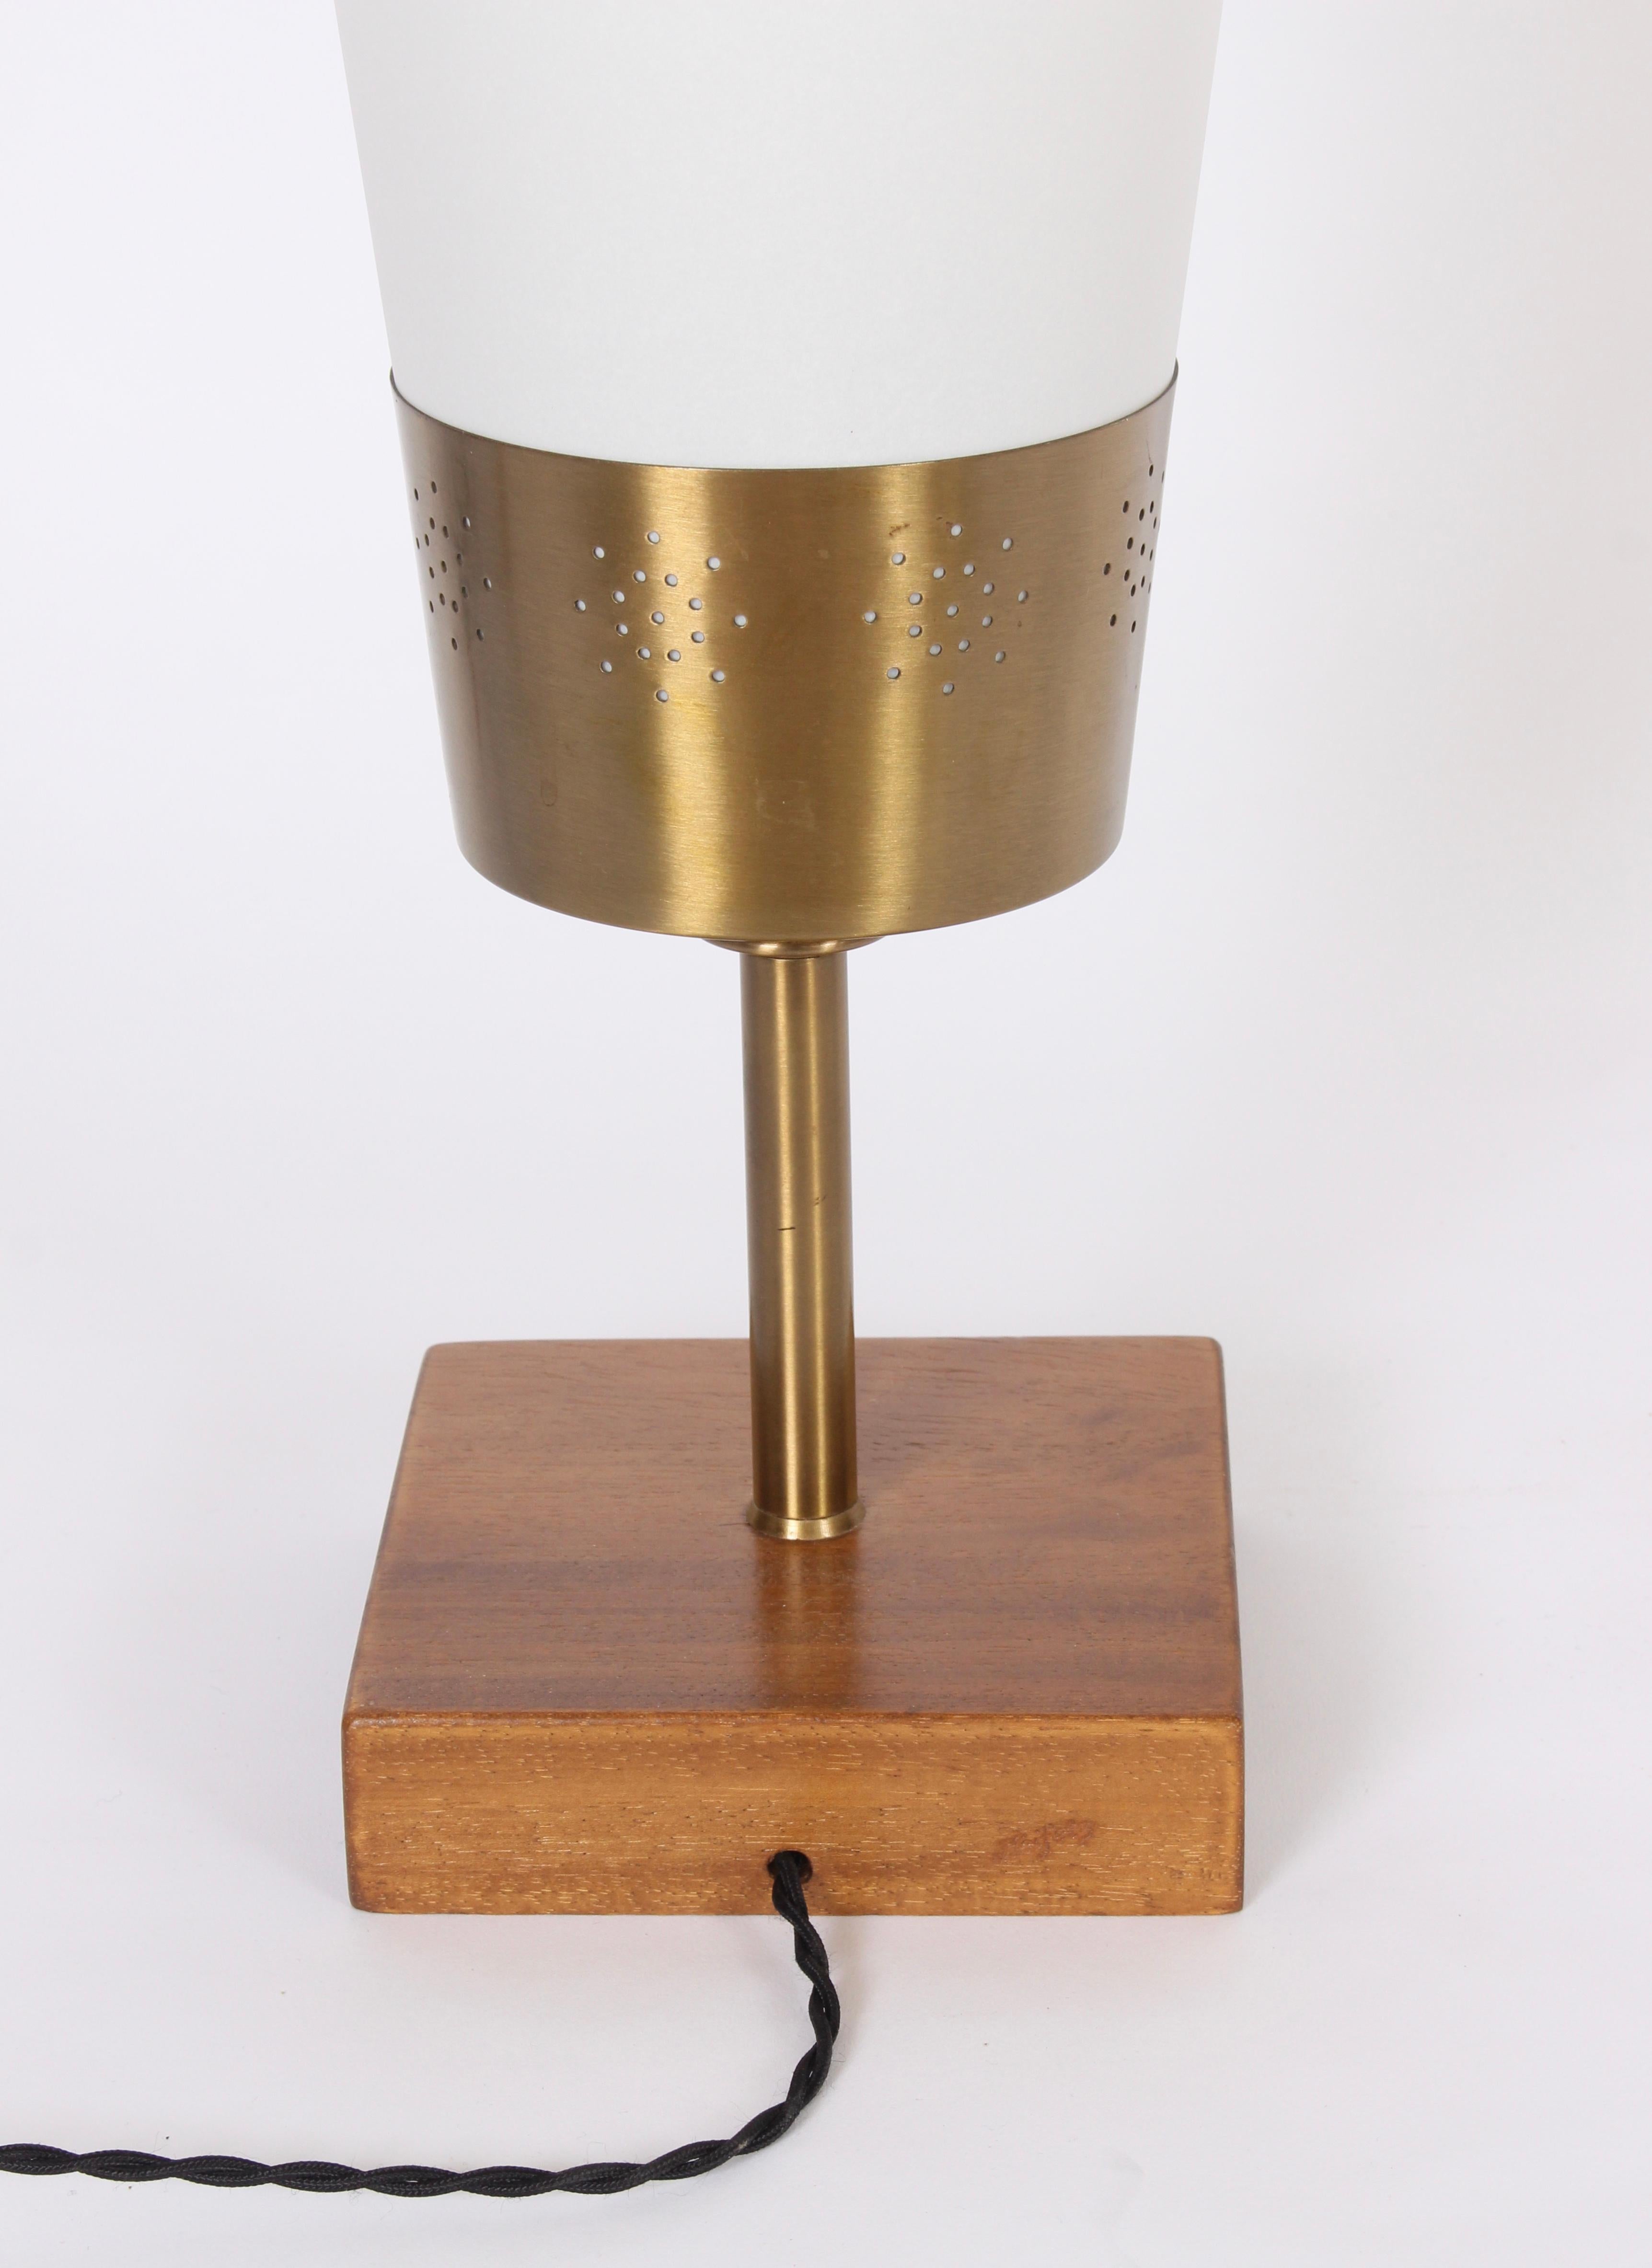 Yasha Heifetz Pierced Brass and Mahogany Table Lamp with White Cone Shade, 1940s 1